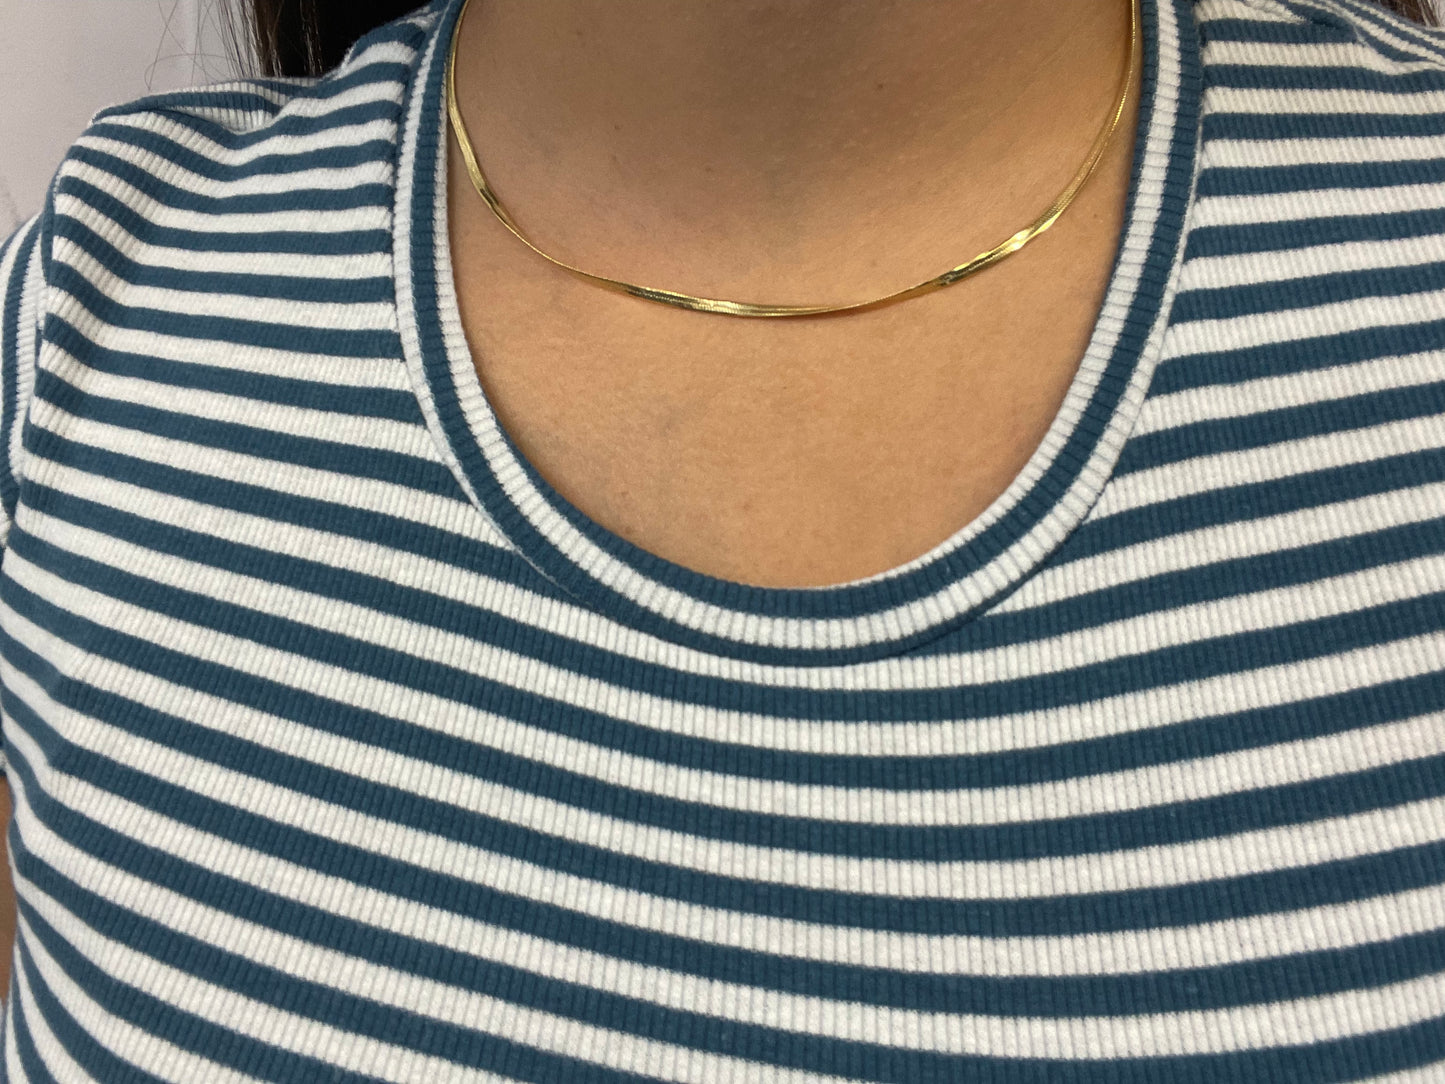 gold herringbone necklace